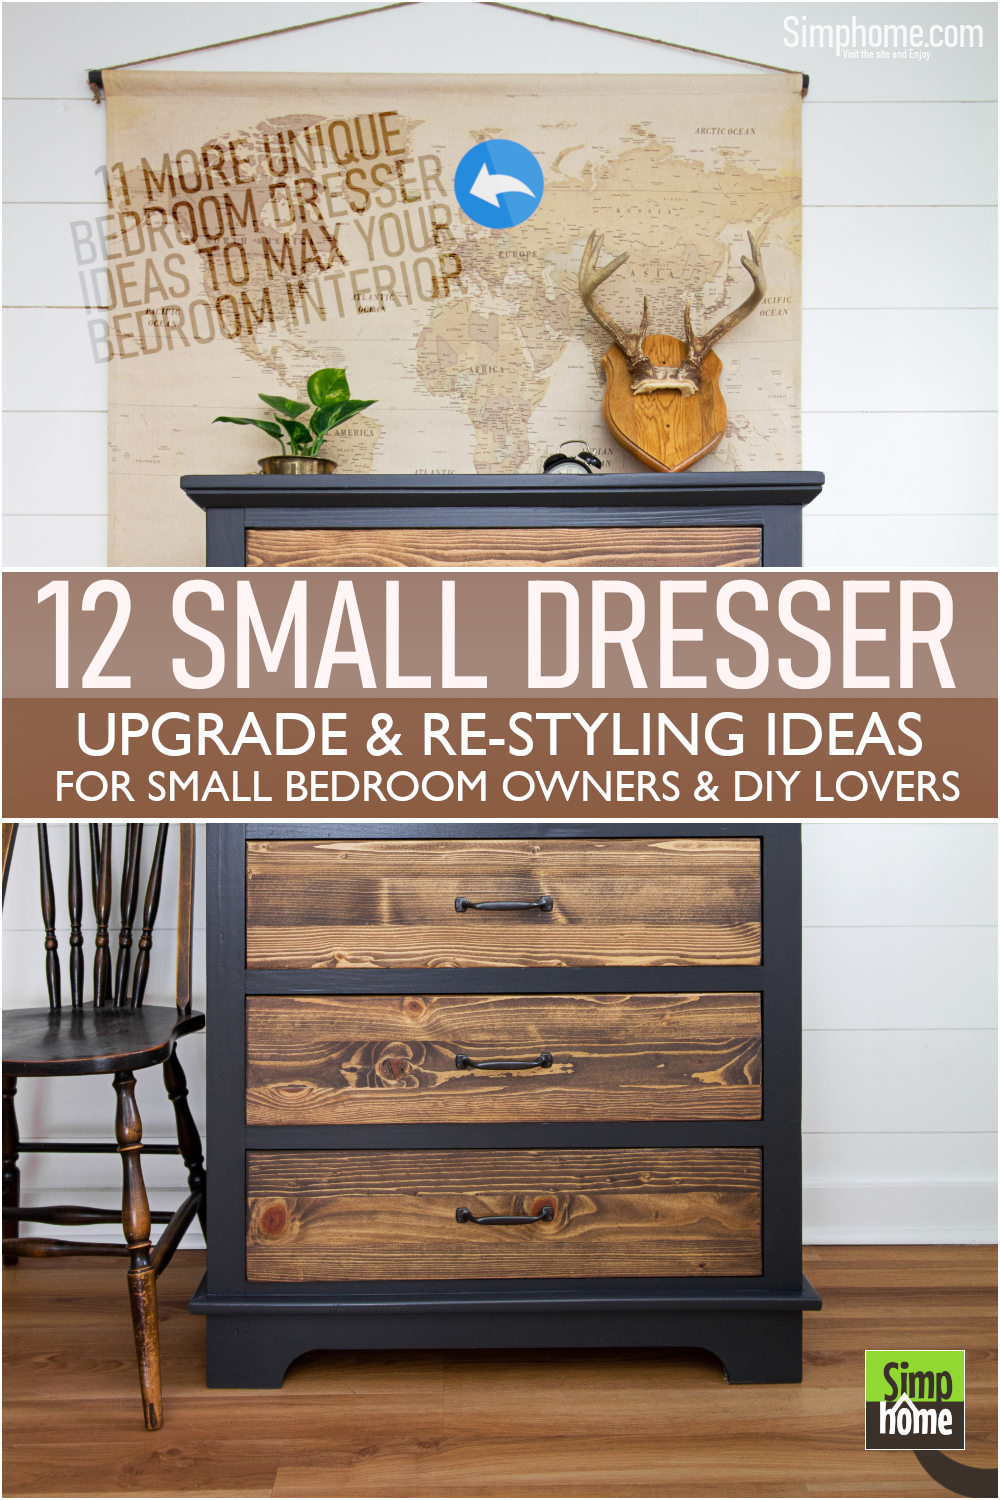 Inspiration of 12 Small Bedroom Dresser Ideas And Styling via Simphome.com